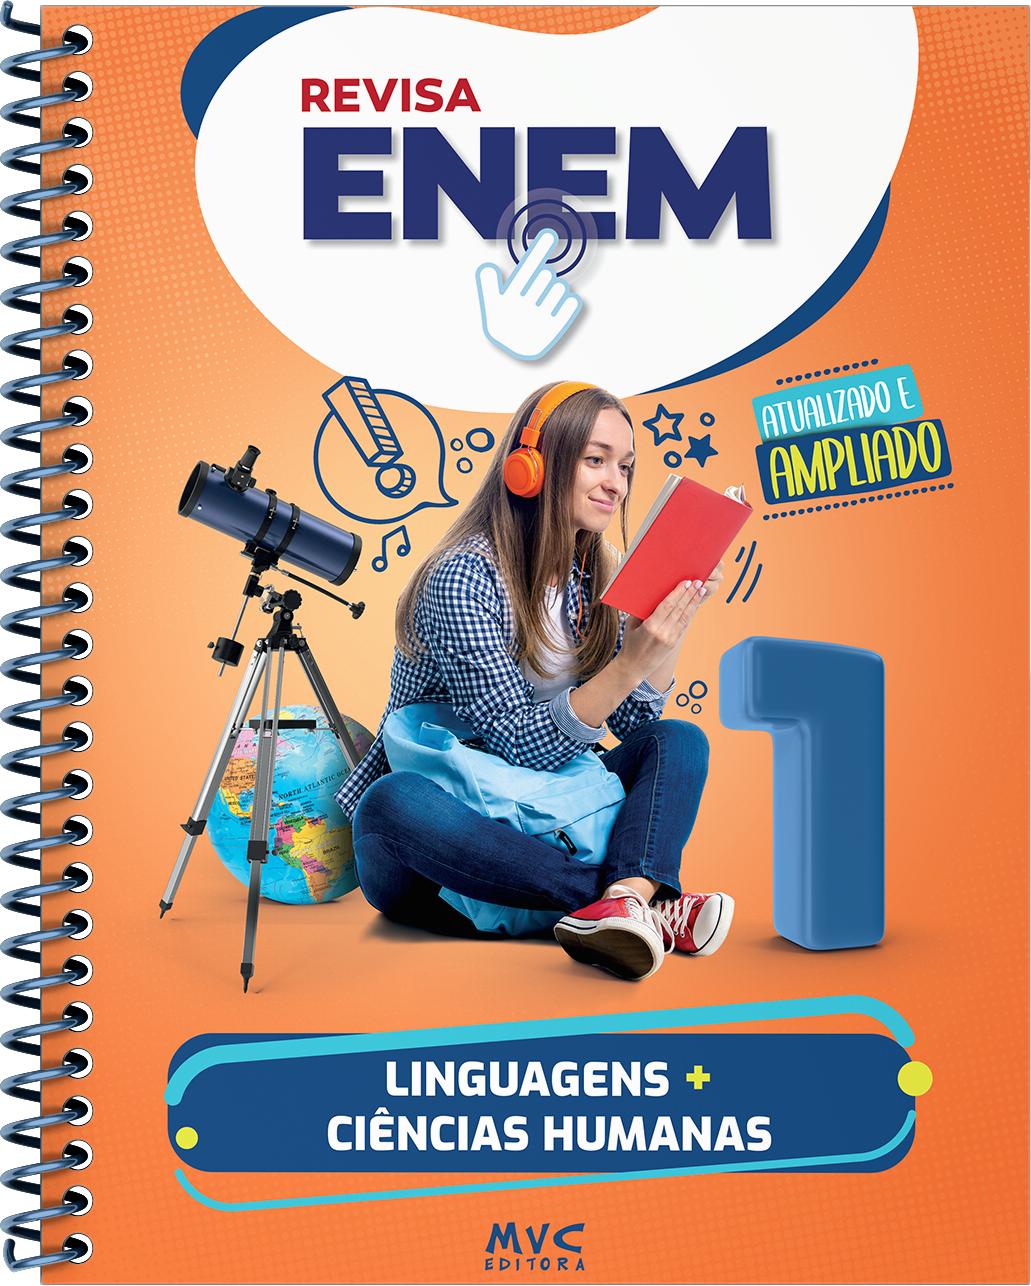 Acerta Mais Enem Inglês - Manual do Professor by editoramvc - Issuu